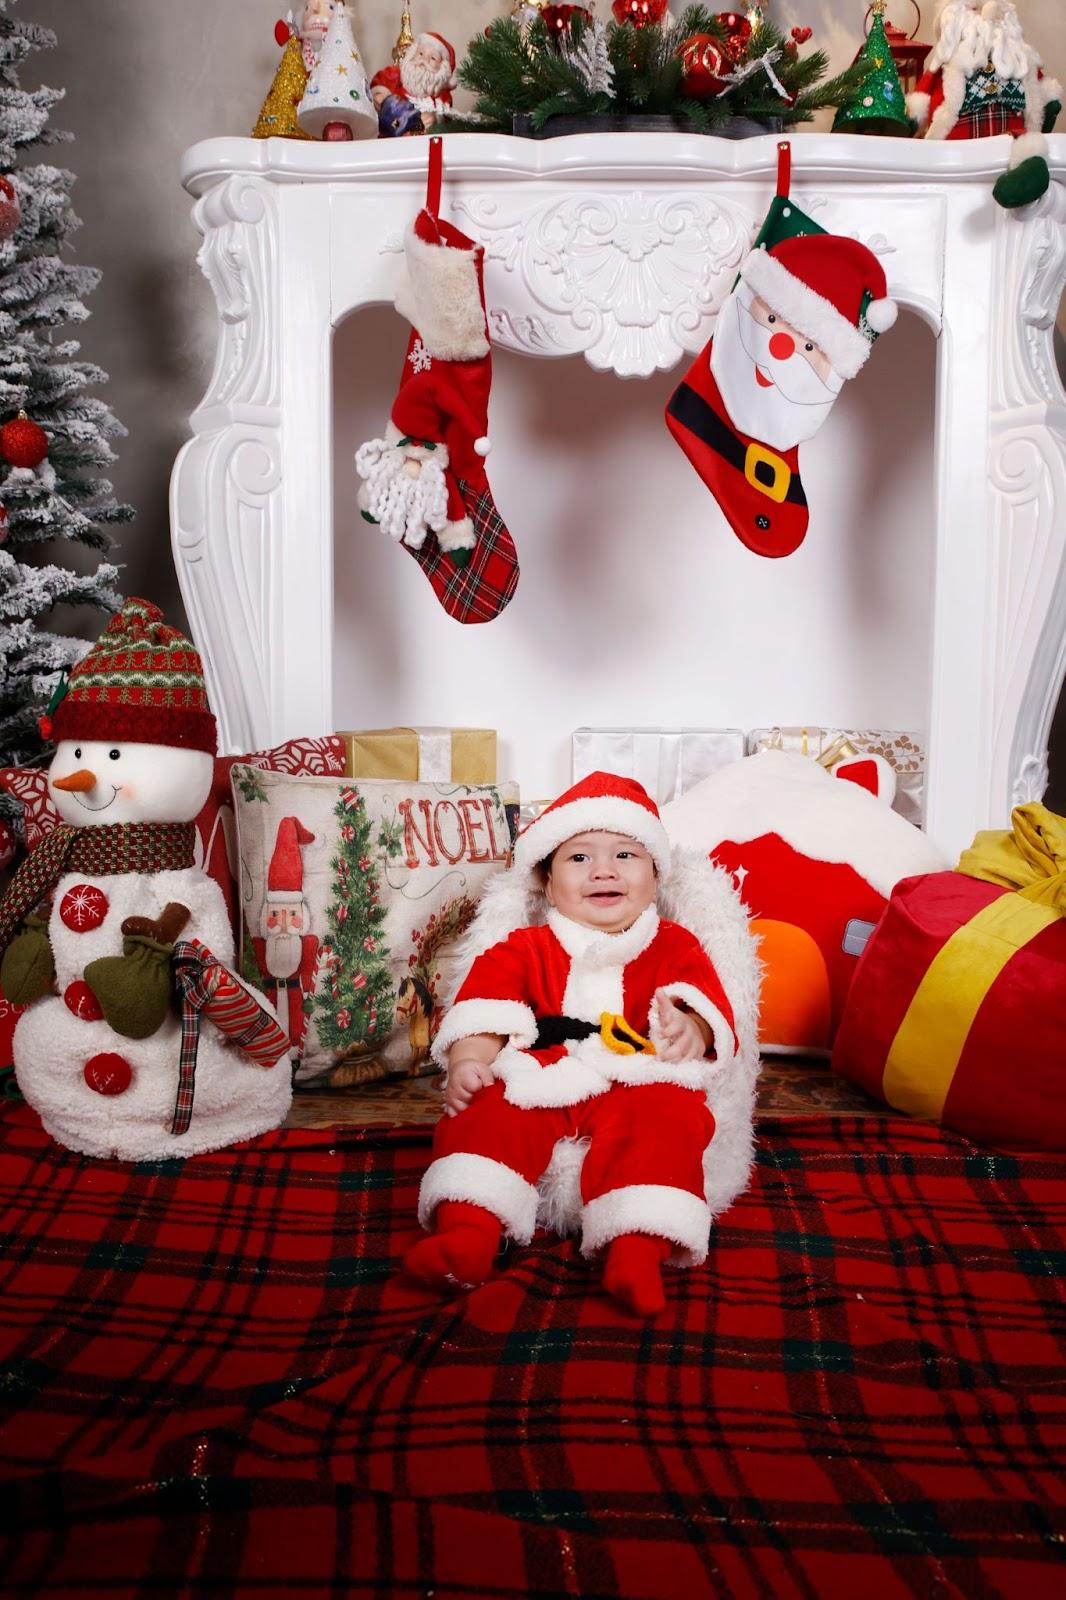 newborn christmas photo idea: baby dressed up as little santa claus